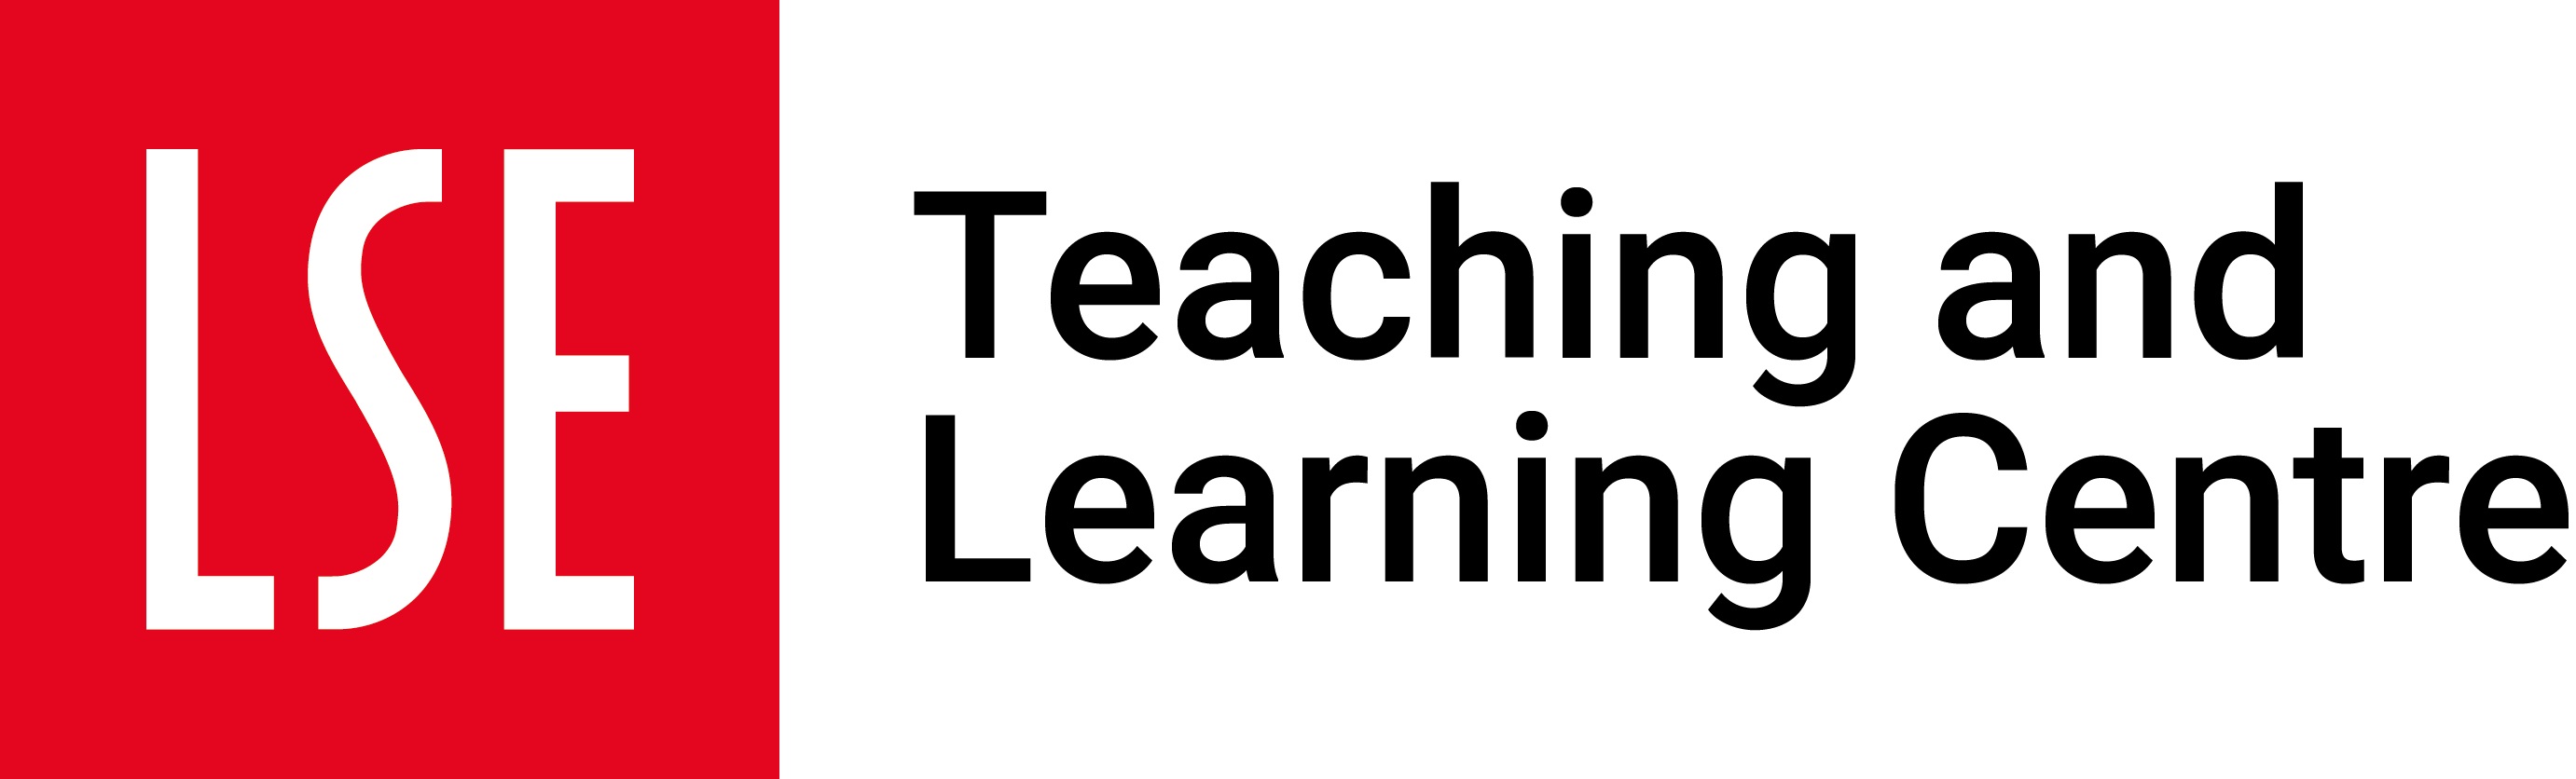 LSE_TeachingAndLearningCentre_CMYK_blk_txt